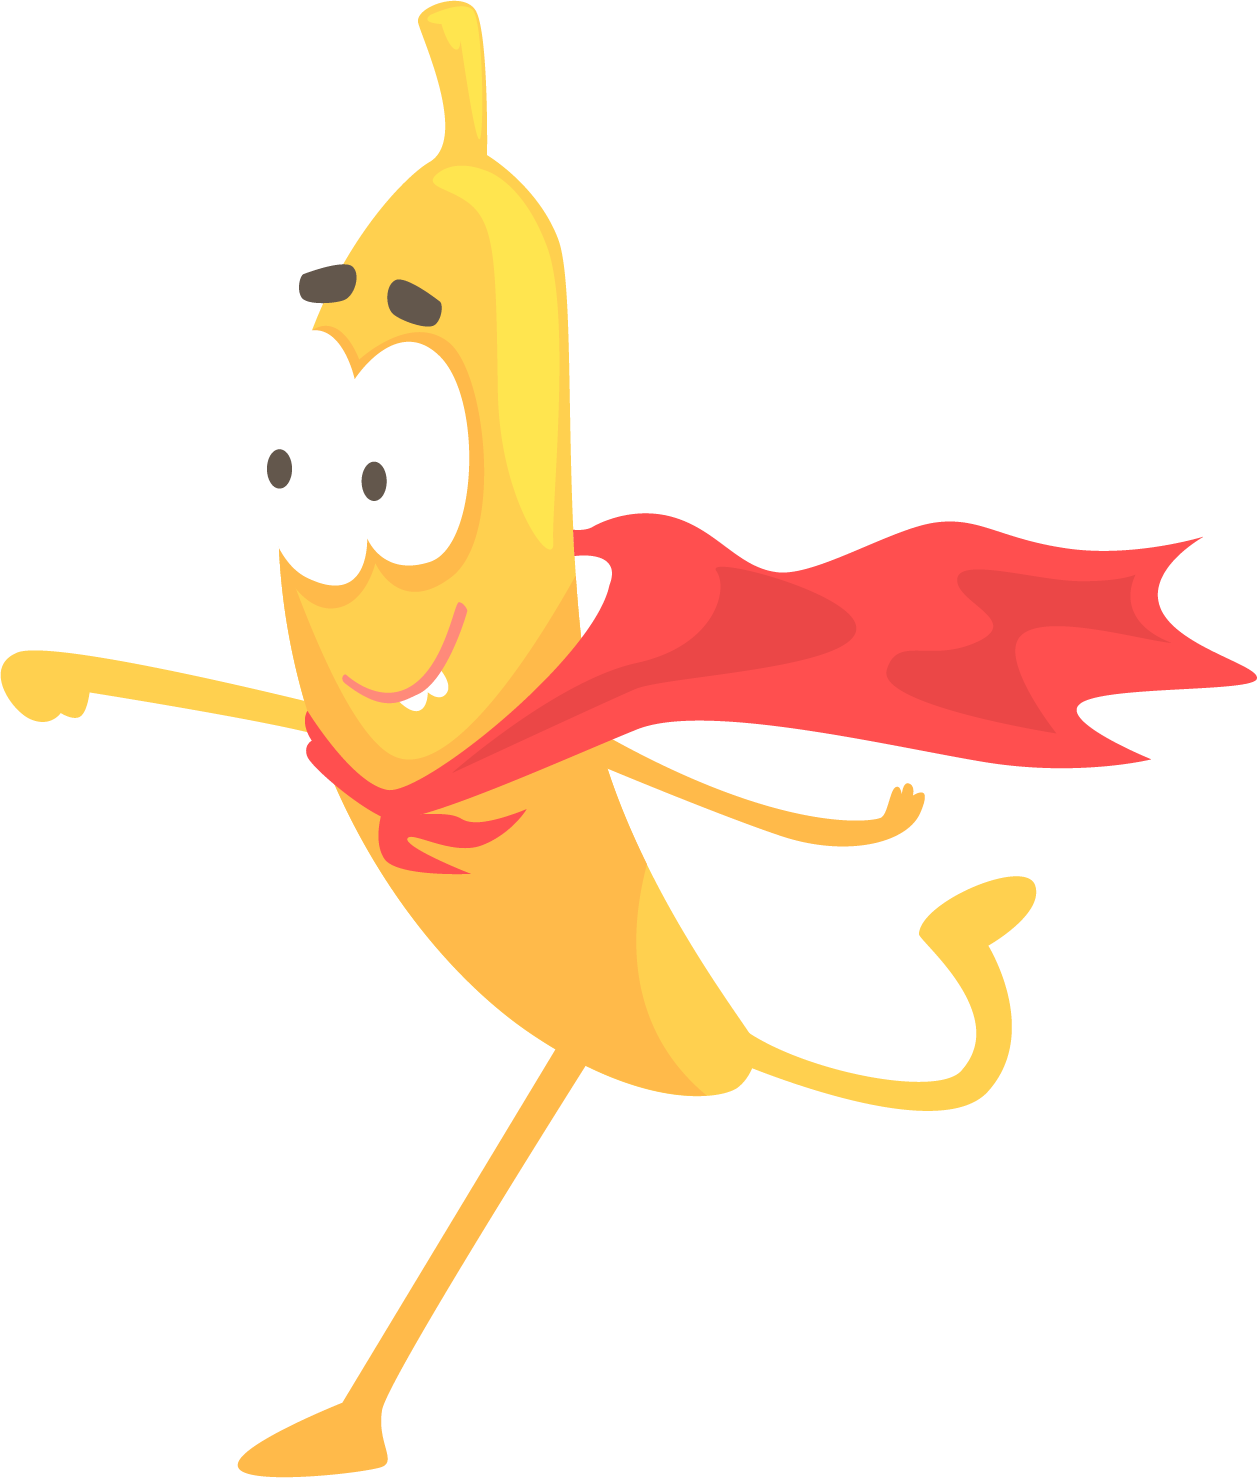 Super Banana - Banana Superhero (1257x1478)